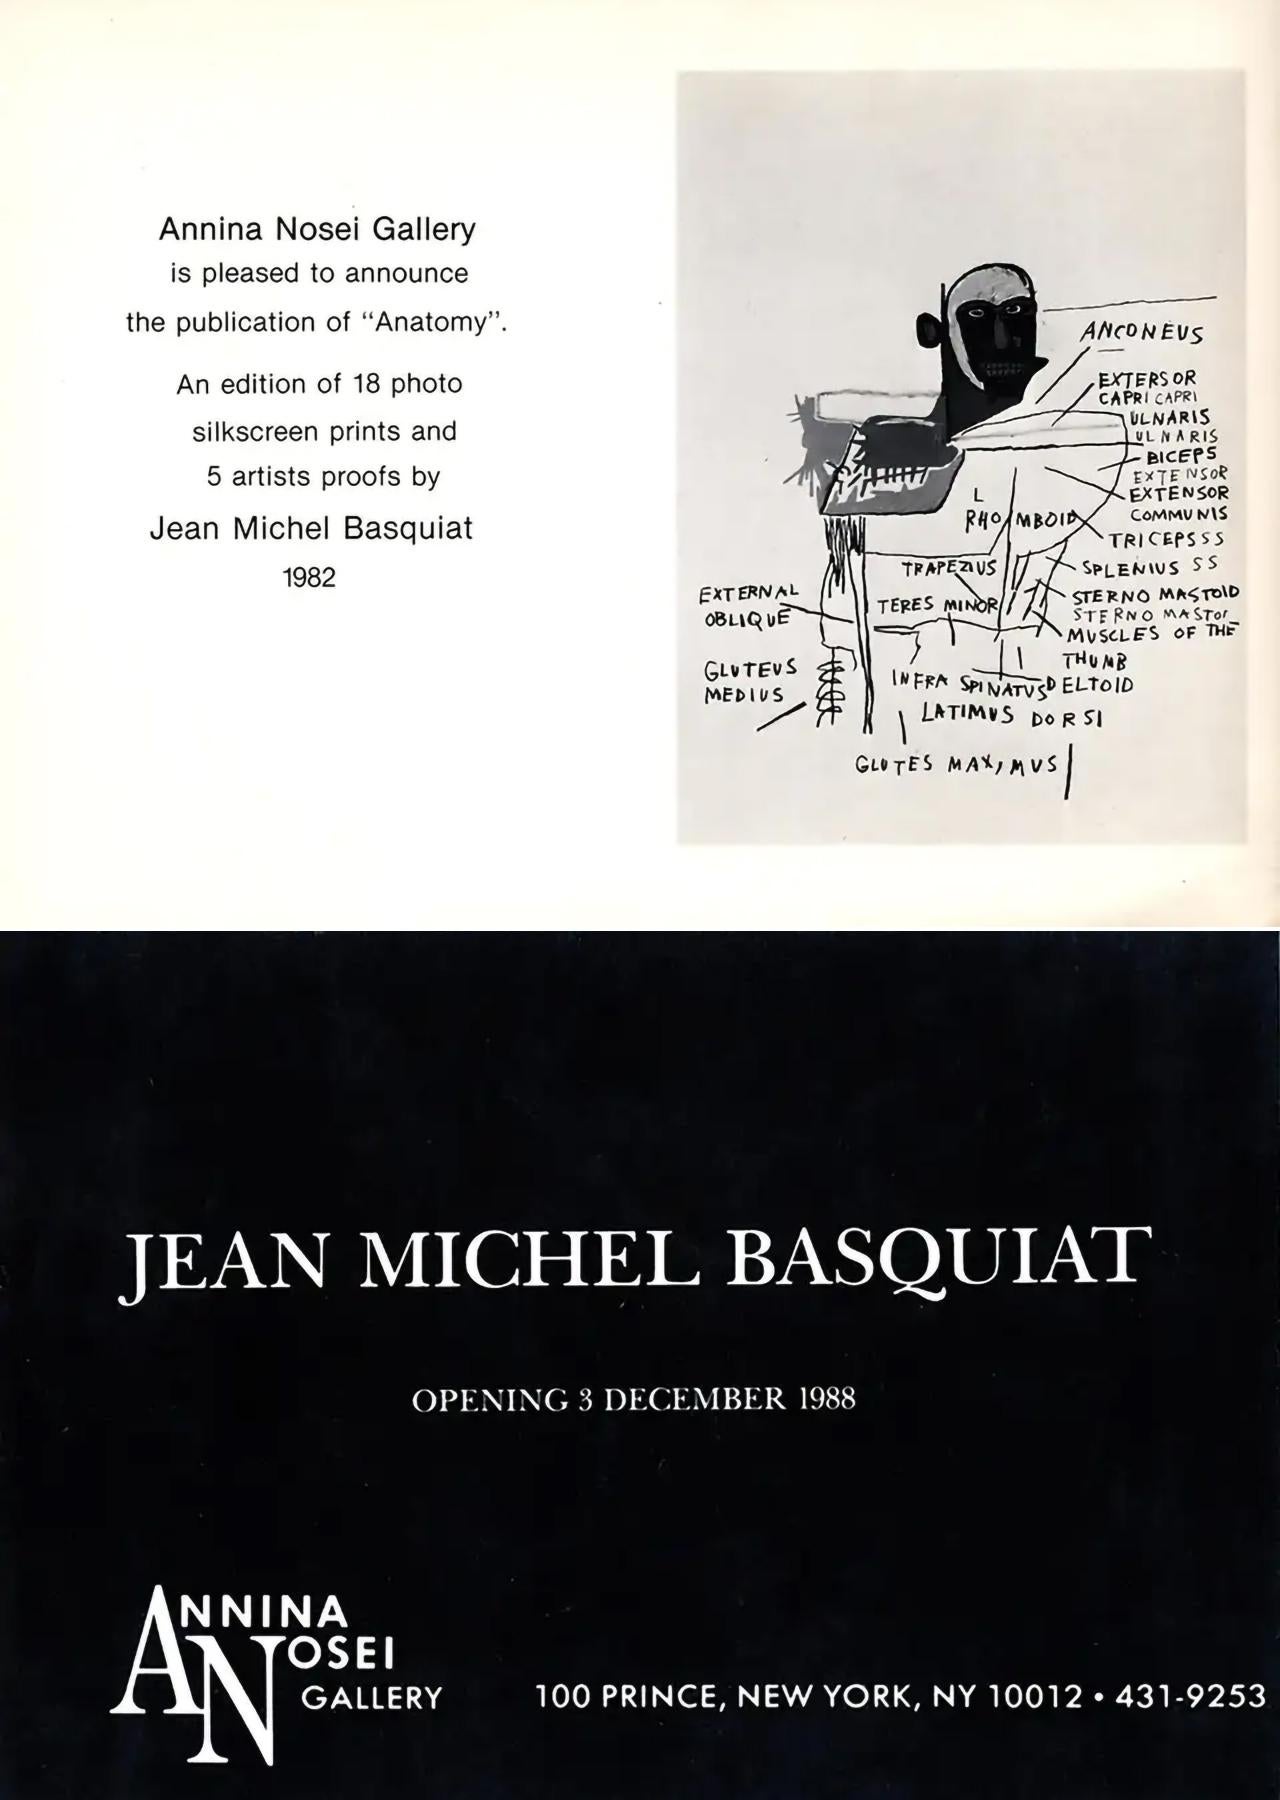 Jean-Michel Basquiat Annina Nosei Gallery NY 1982-1988 (Basquiat Annina Nosei) - Print by after Jean-Michel Basquiat